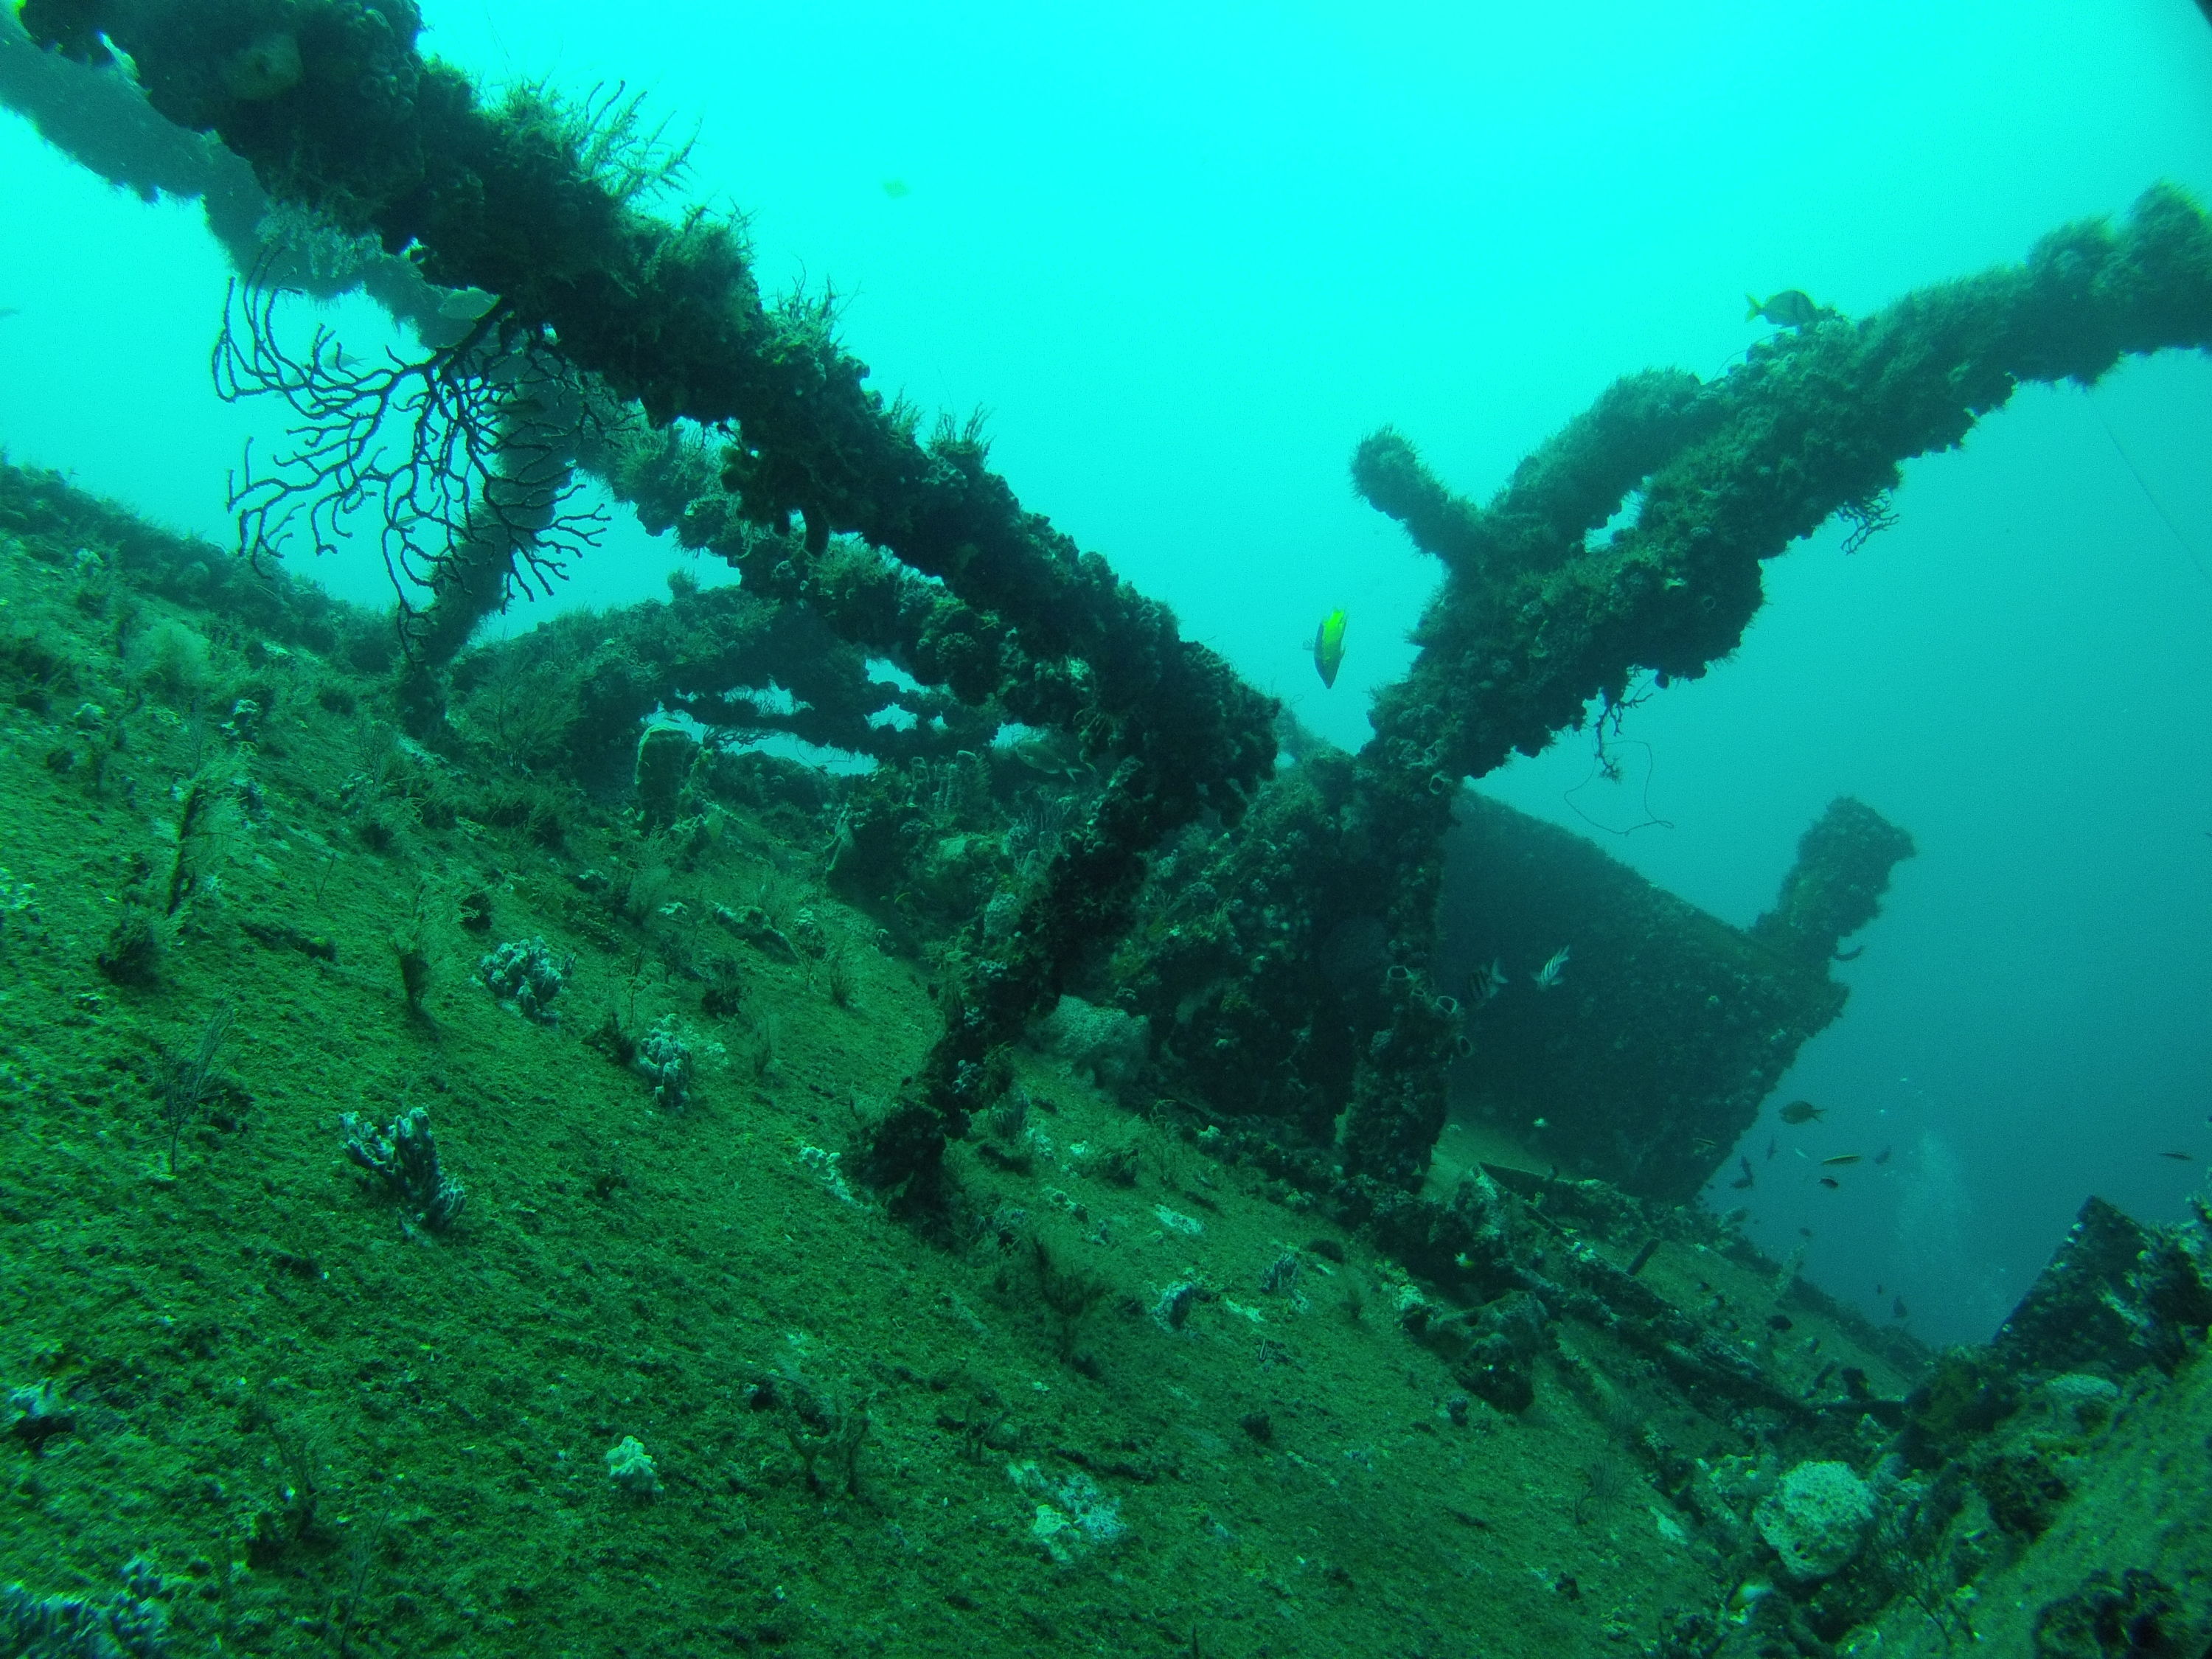 Shipwreck topside